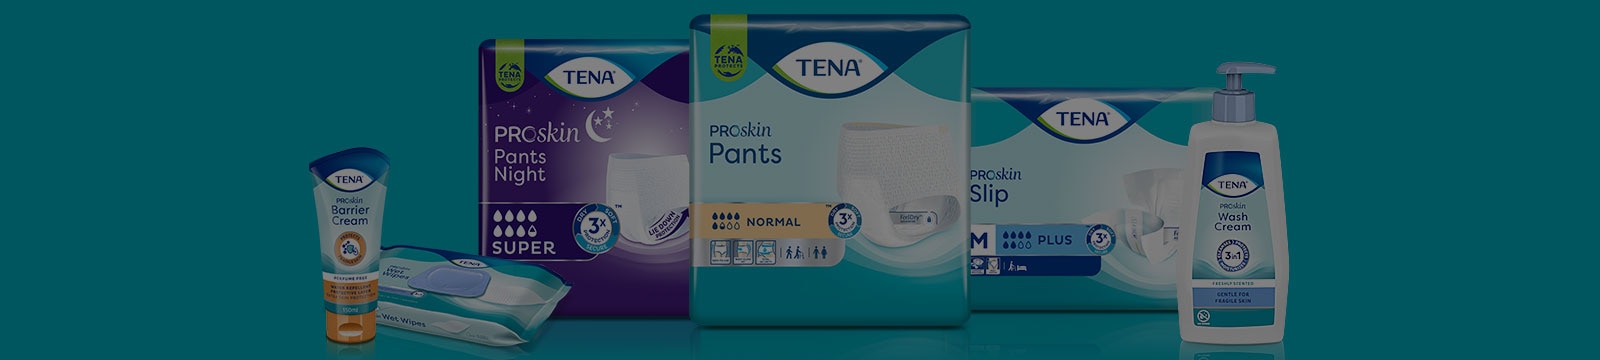 The TENA ProSkin product range